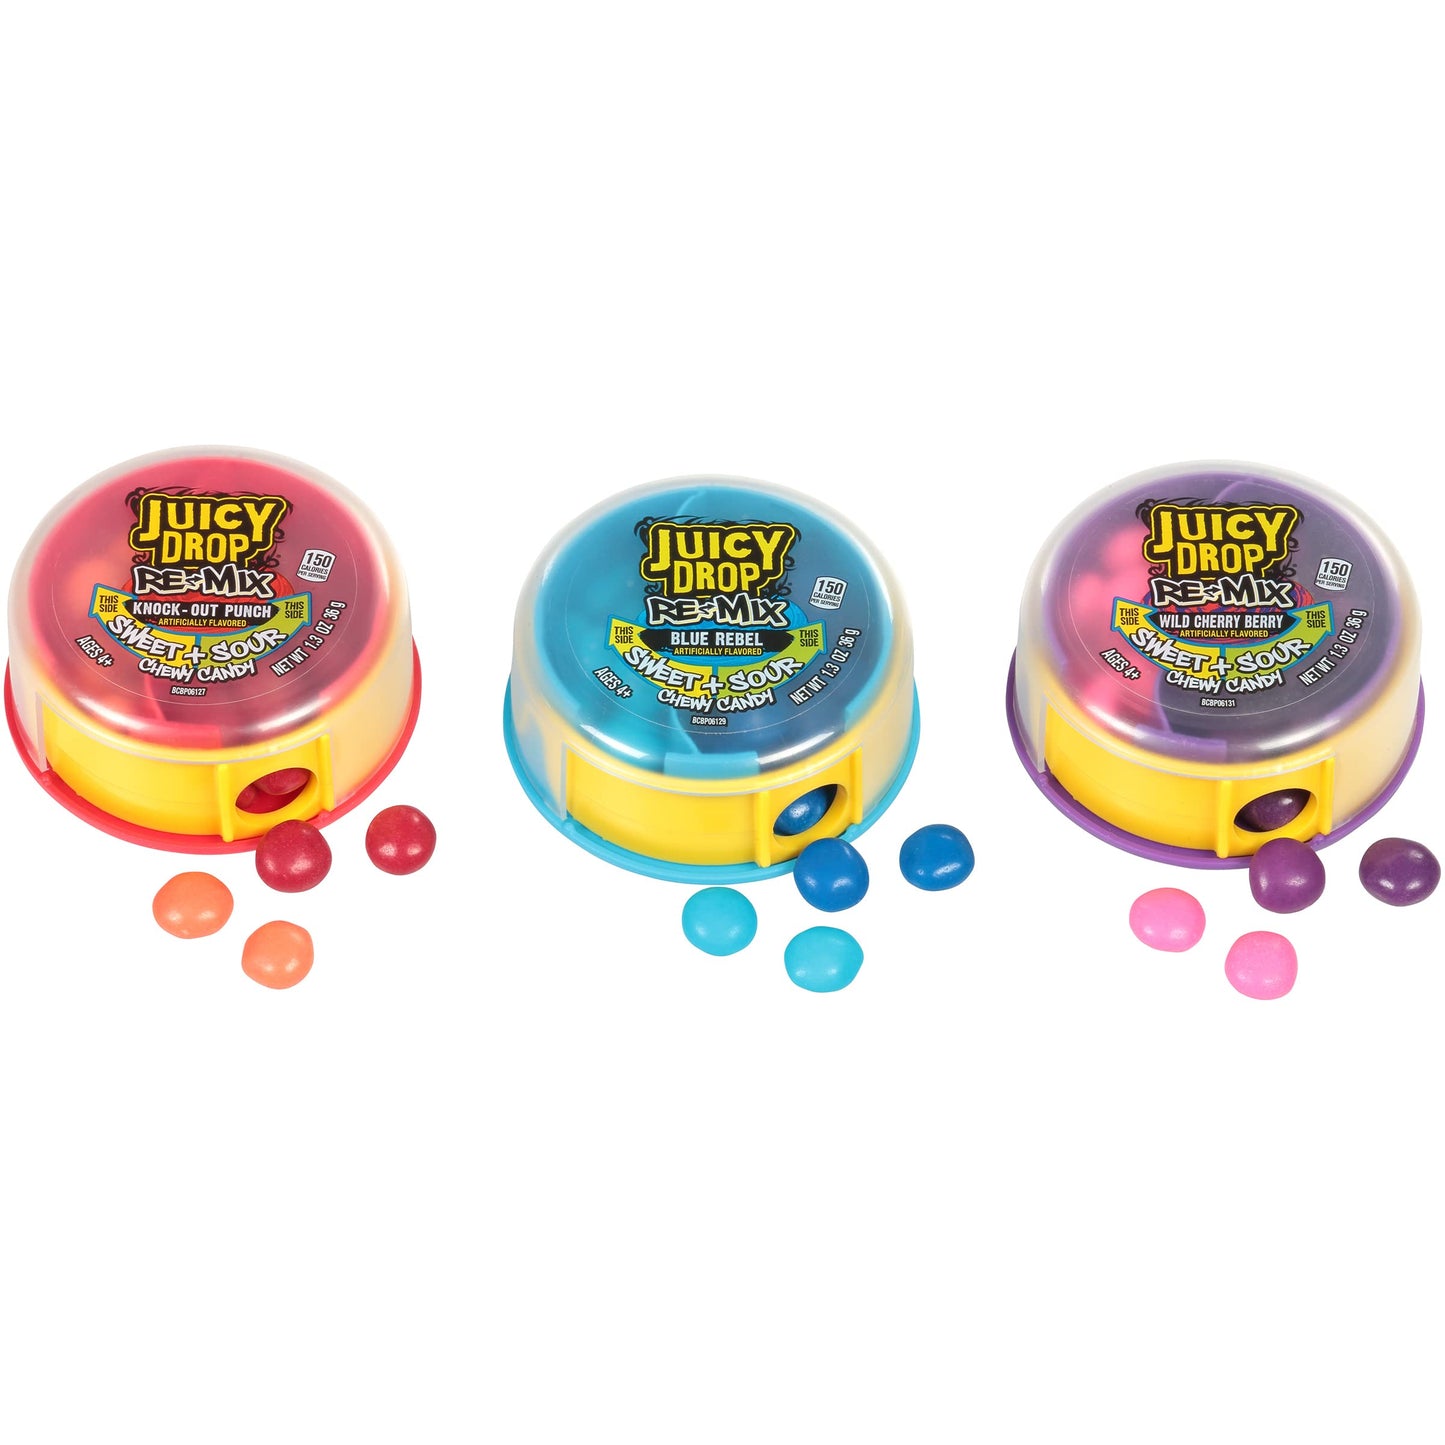 Juicy Drops Re-Mix Candy